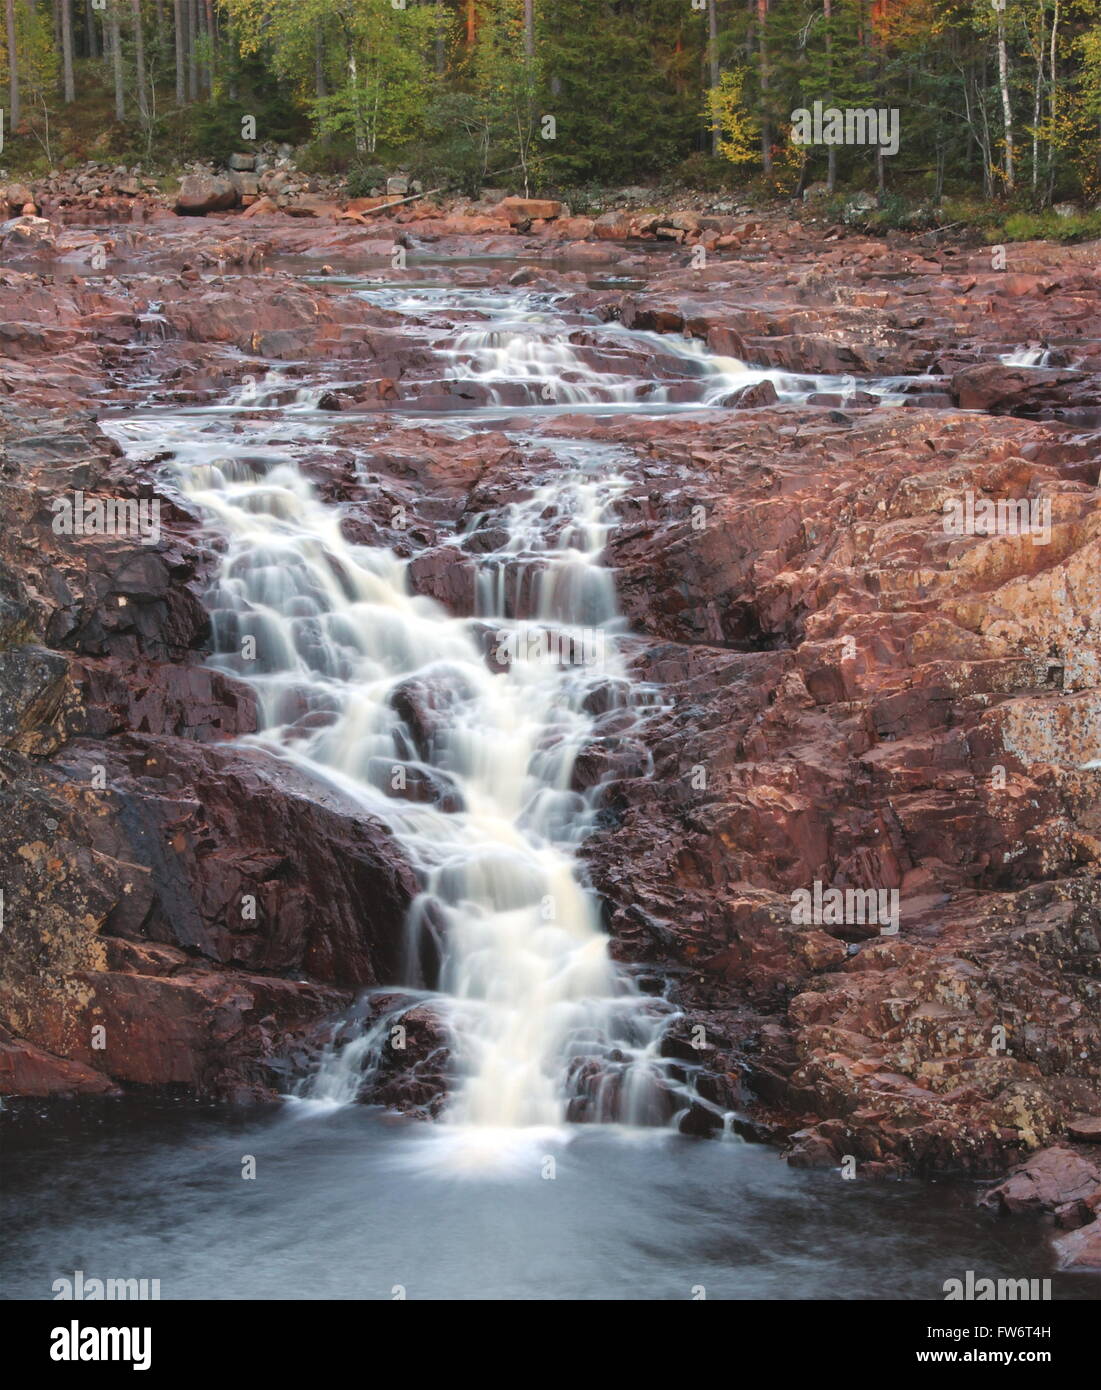 Long exposure of a waterfall (Brattfallet) on red rocks, in Värmland, Sweden. Stock Photo